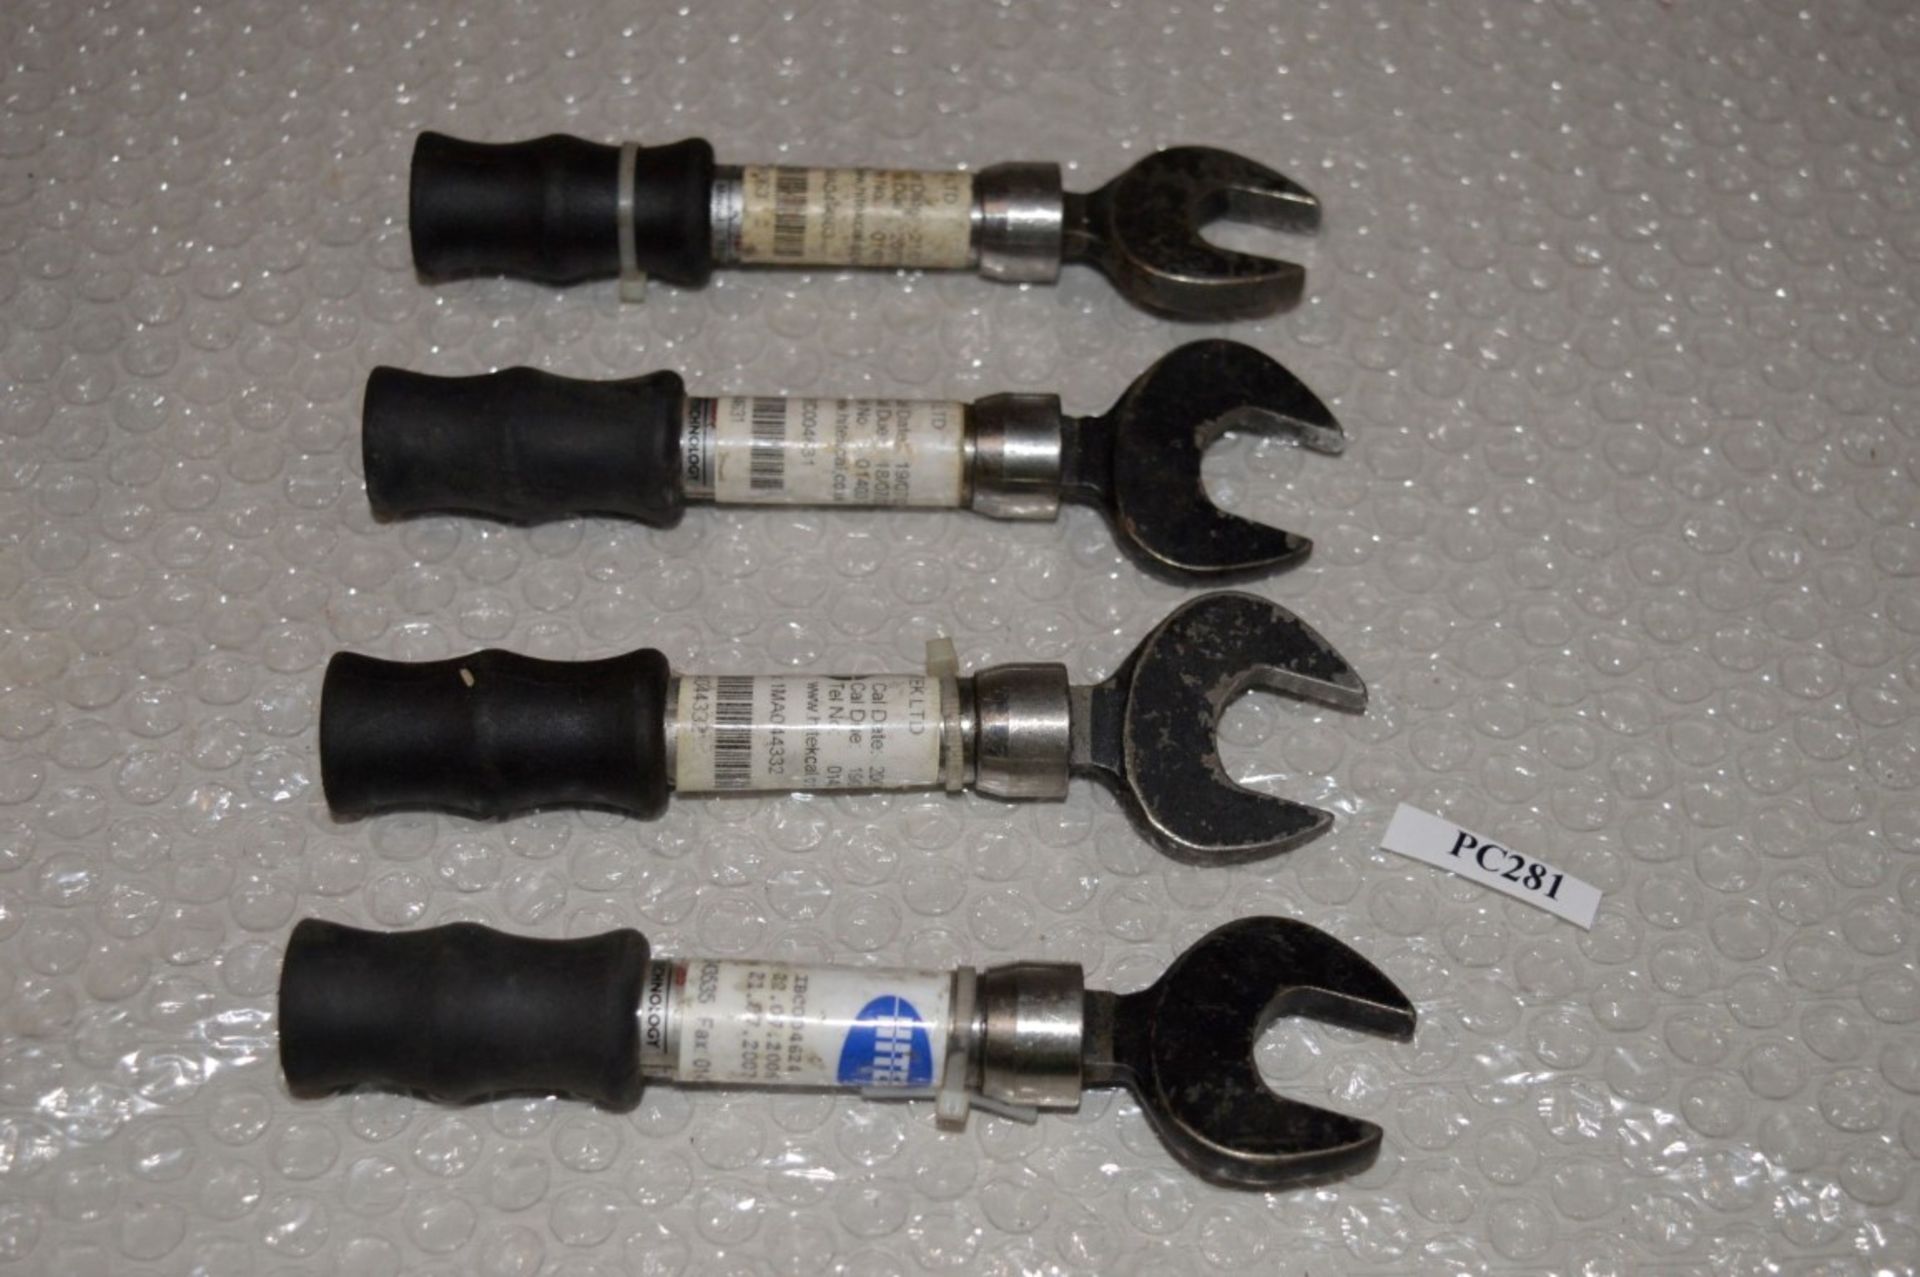 4 x Torqueleader Model TBN2 Torque Wrenches - CL300 - Ref PC281 - Location: Altrincham WA14 - Image 2 of 2